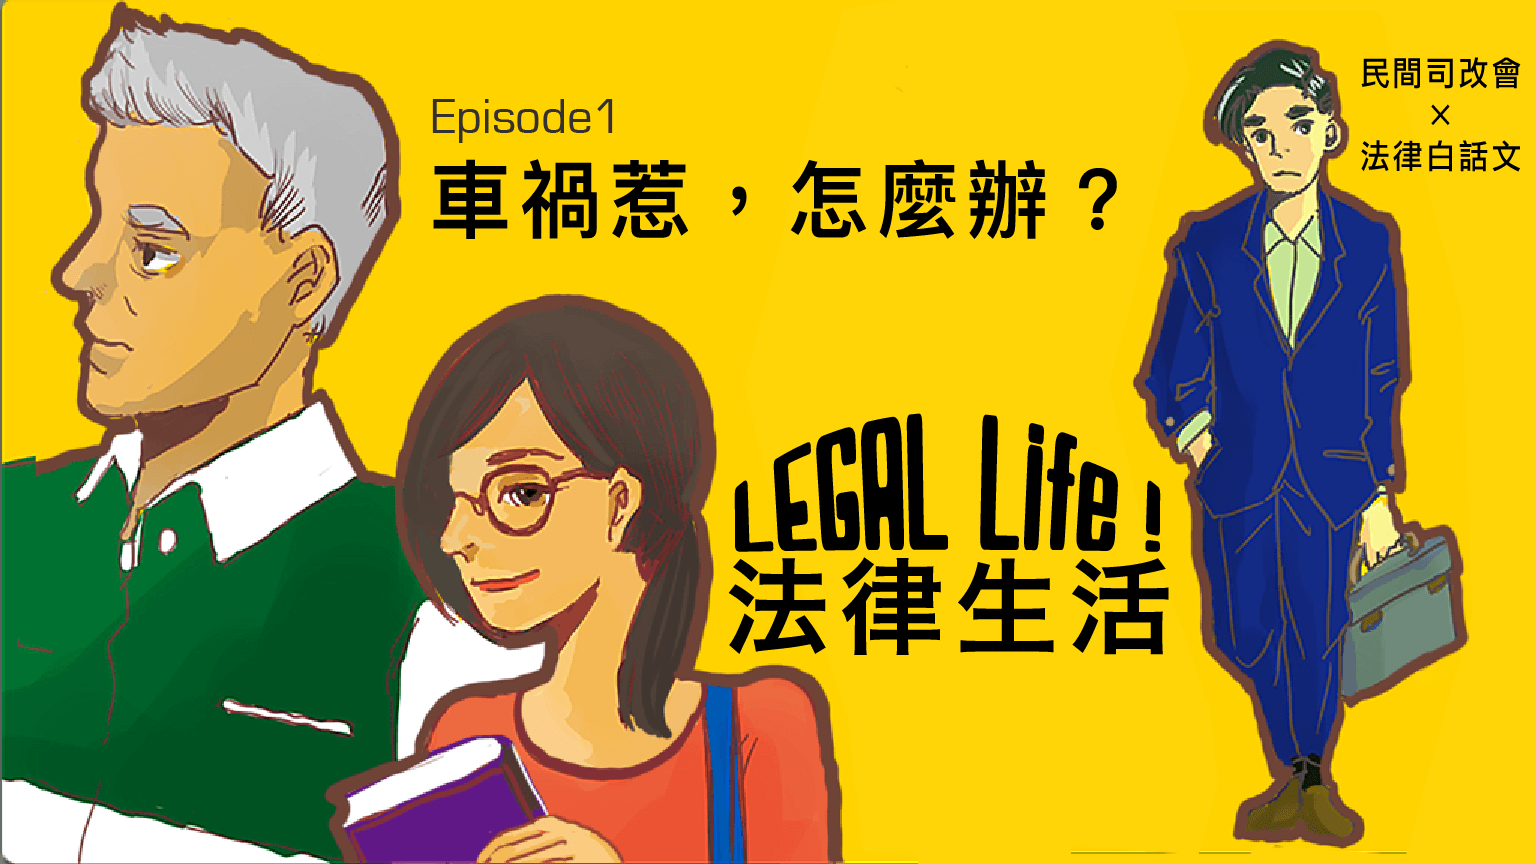 2016/06/legal-life1-1.png